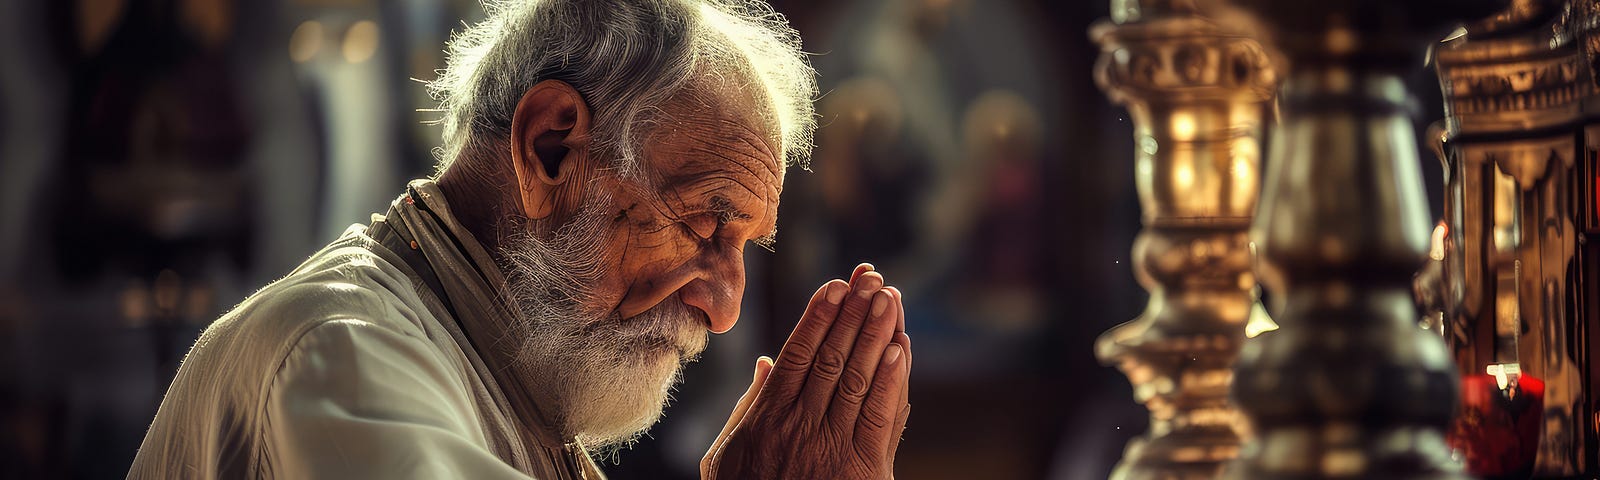 Mature man in a church prays in a prayer gesture. Man in prayer, church interior. Contemplative Prayer.